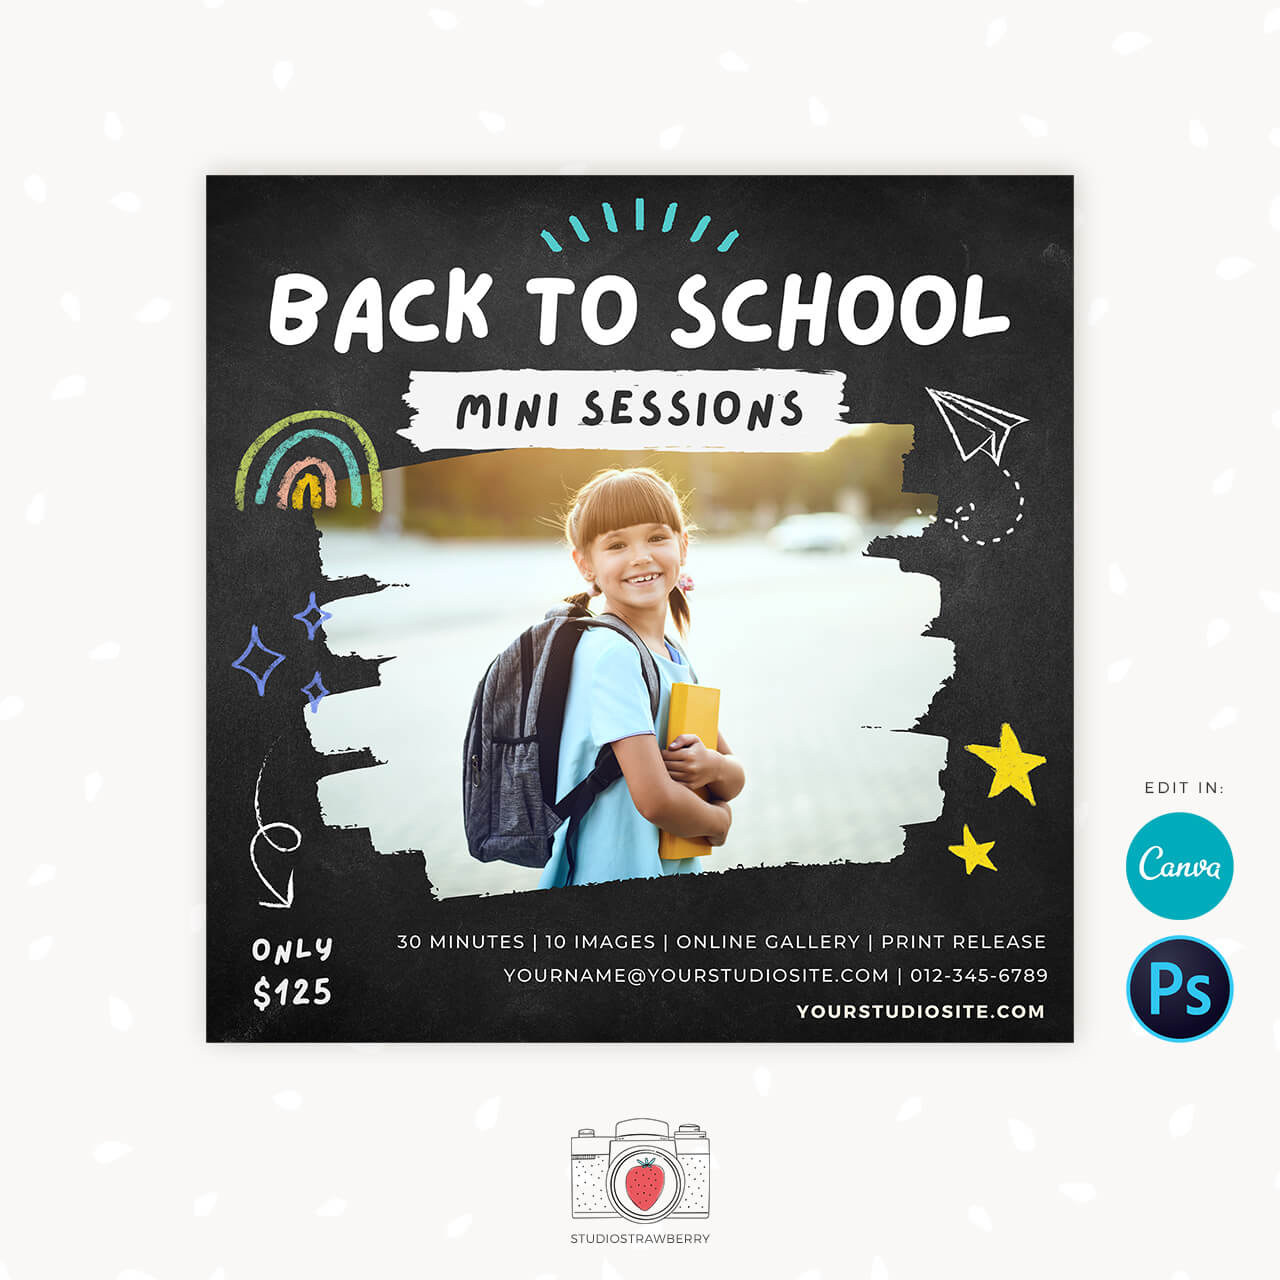 Back to school mini sessions chalkboard